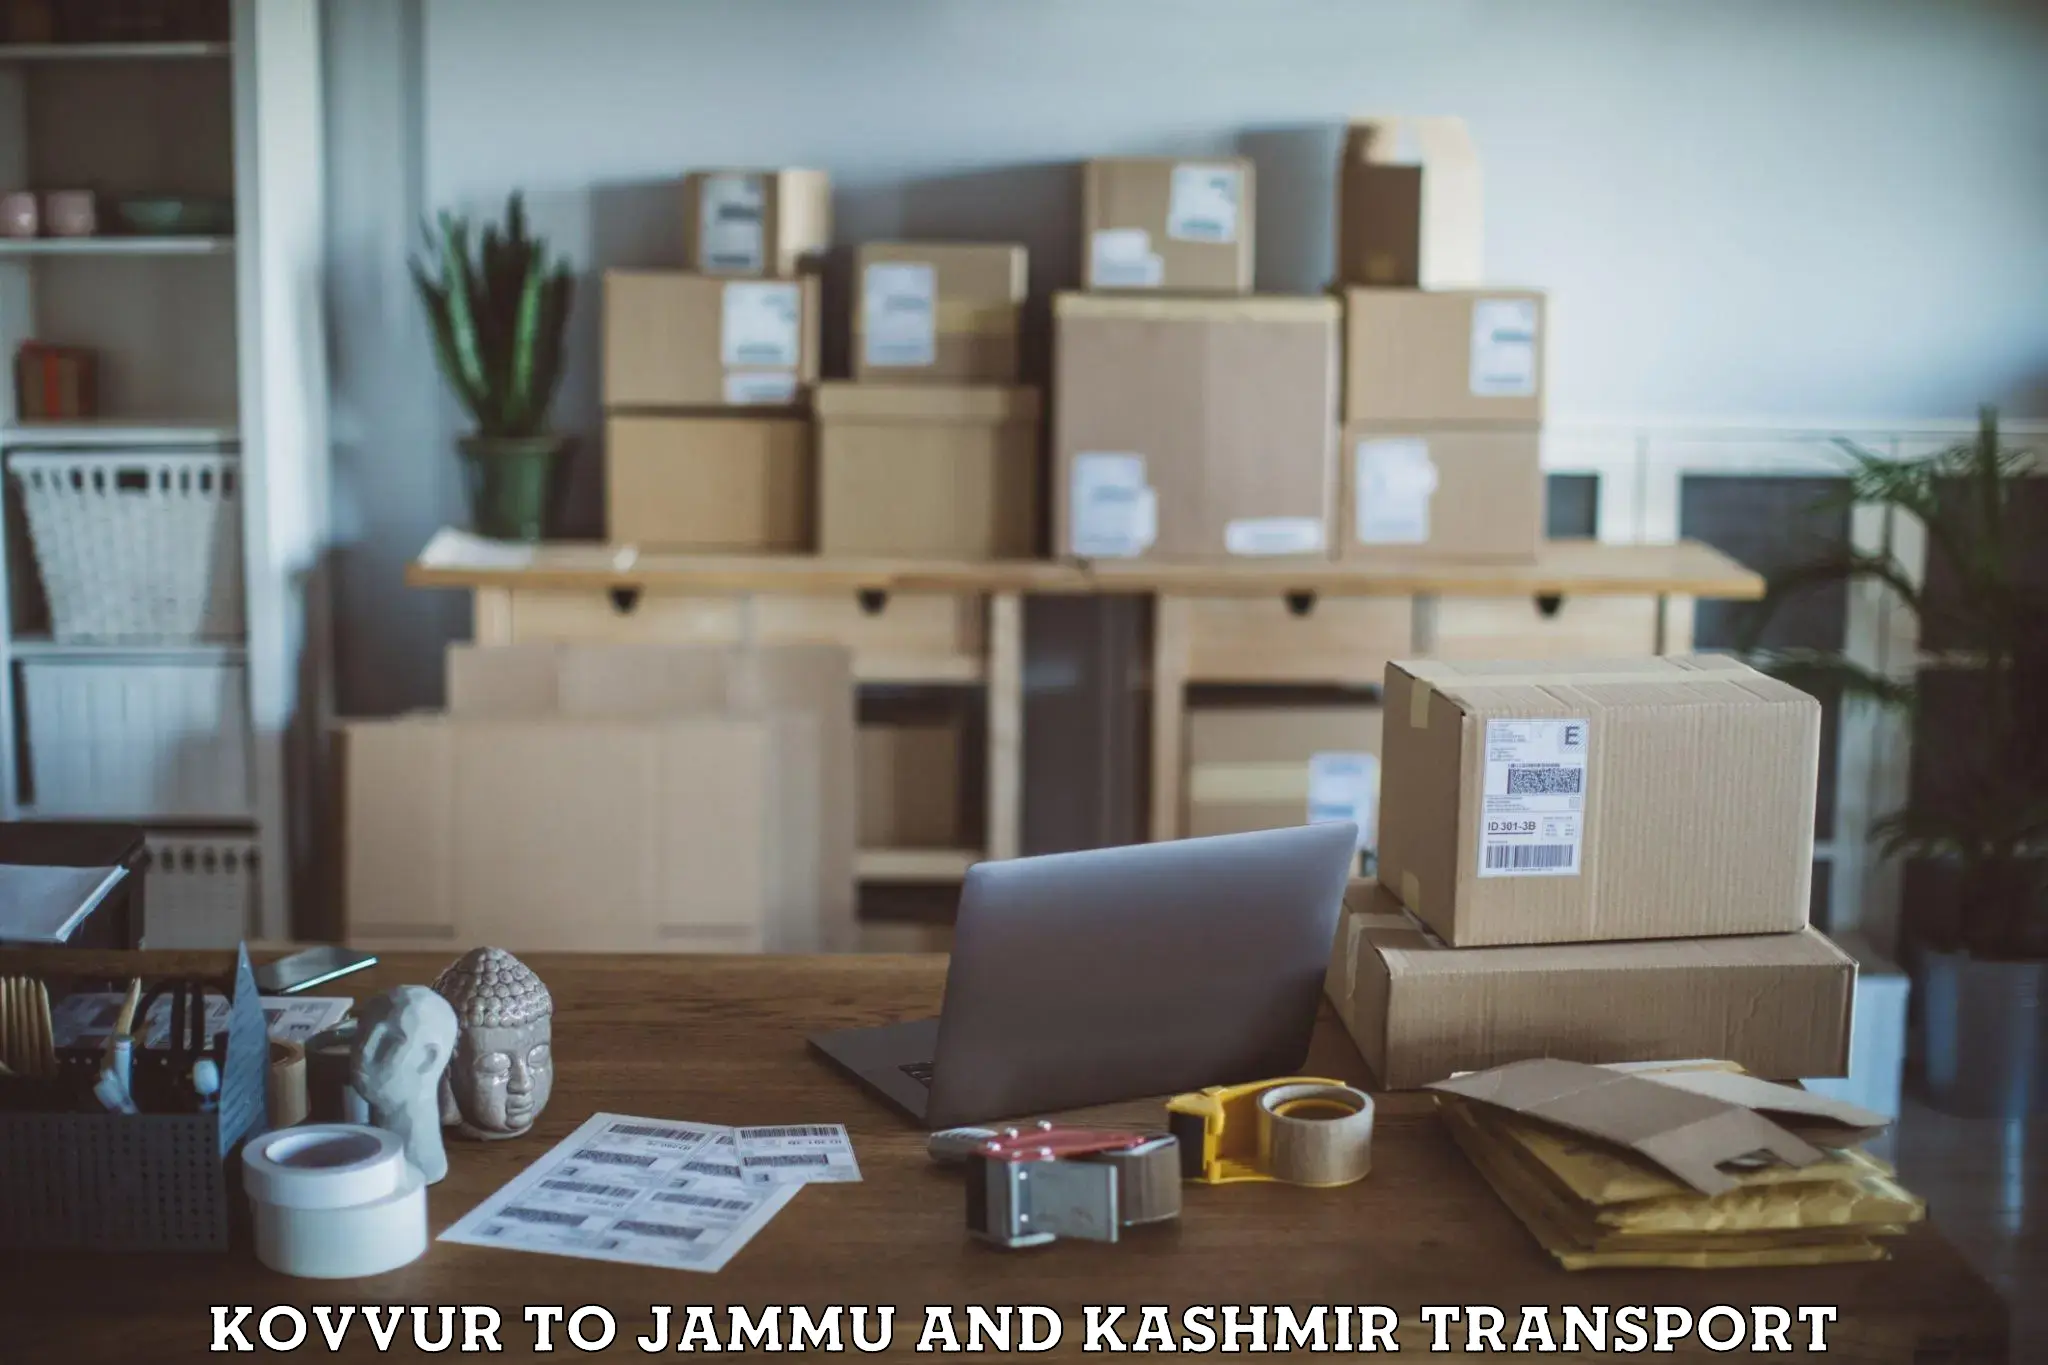 Lorry transport service Kovvur to University of Jammu